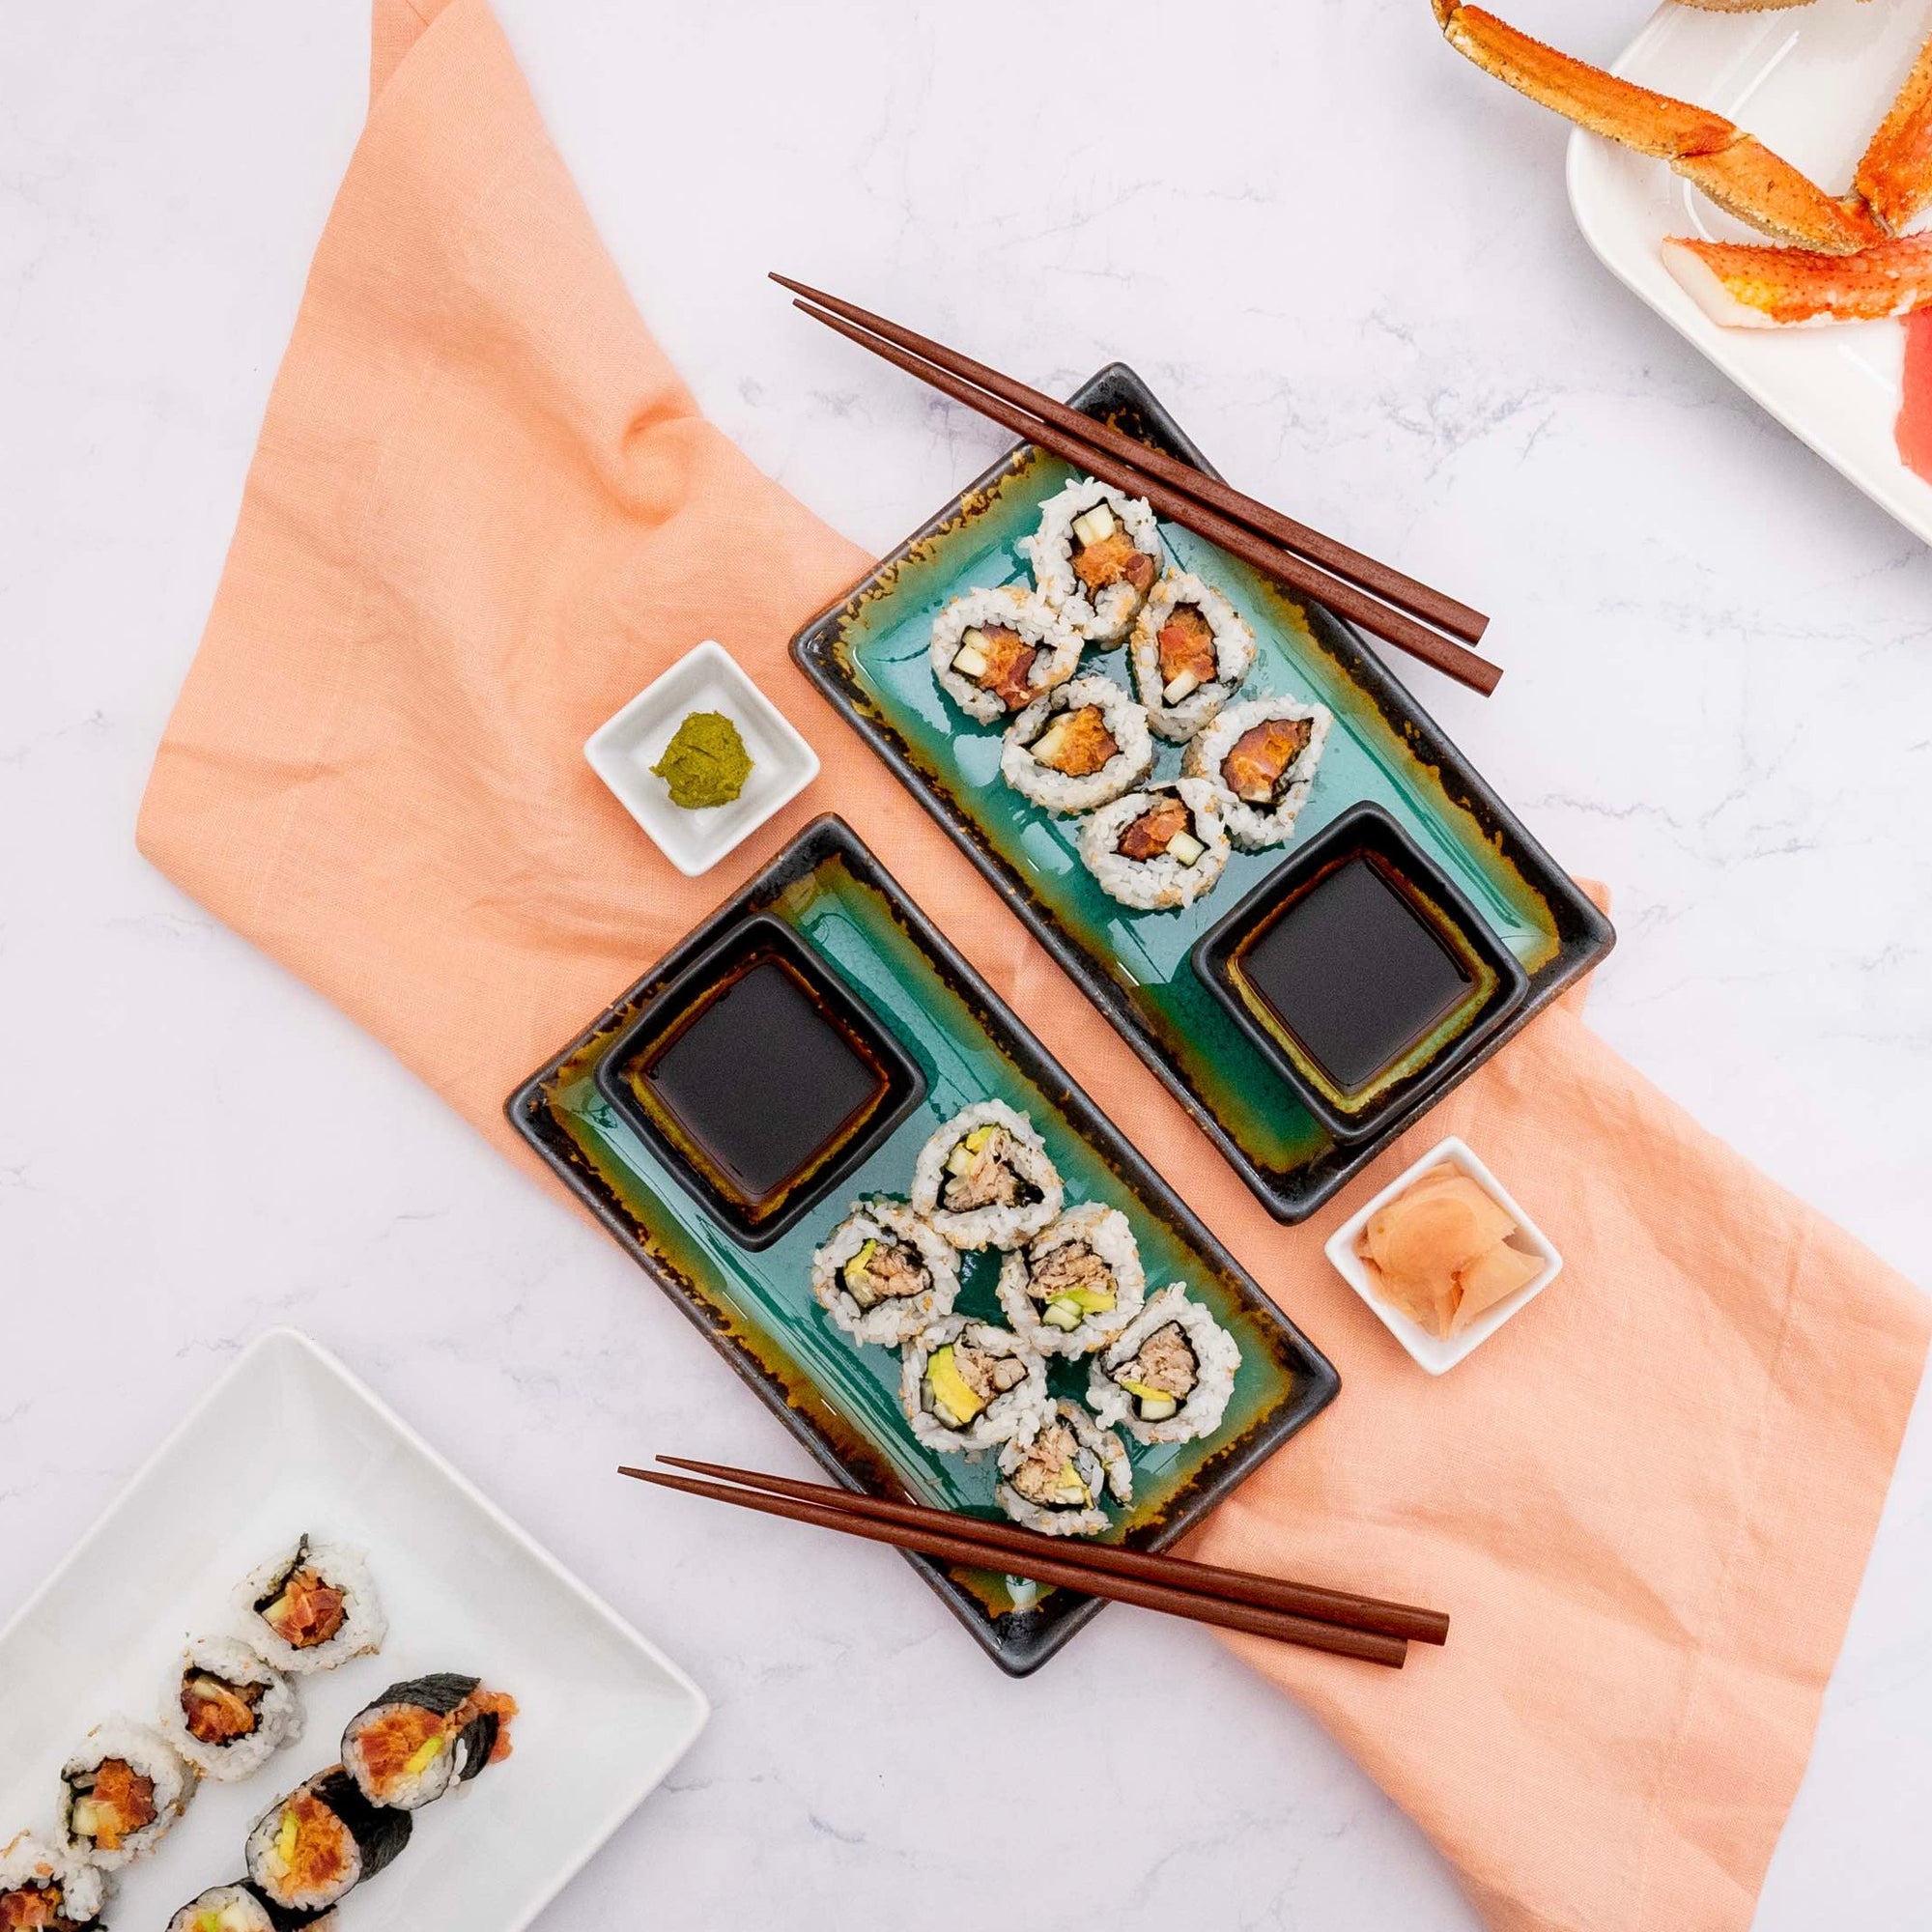 Sushi Making Kit • Zestfull